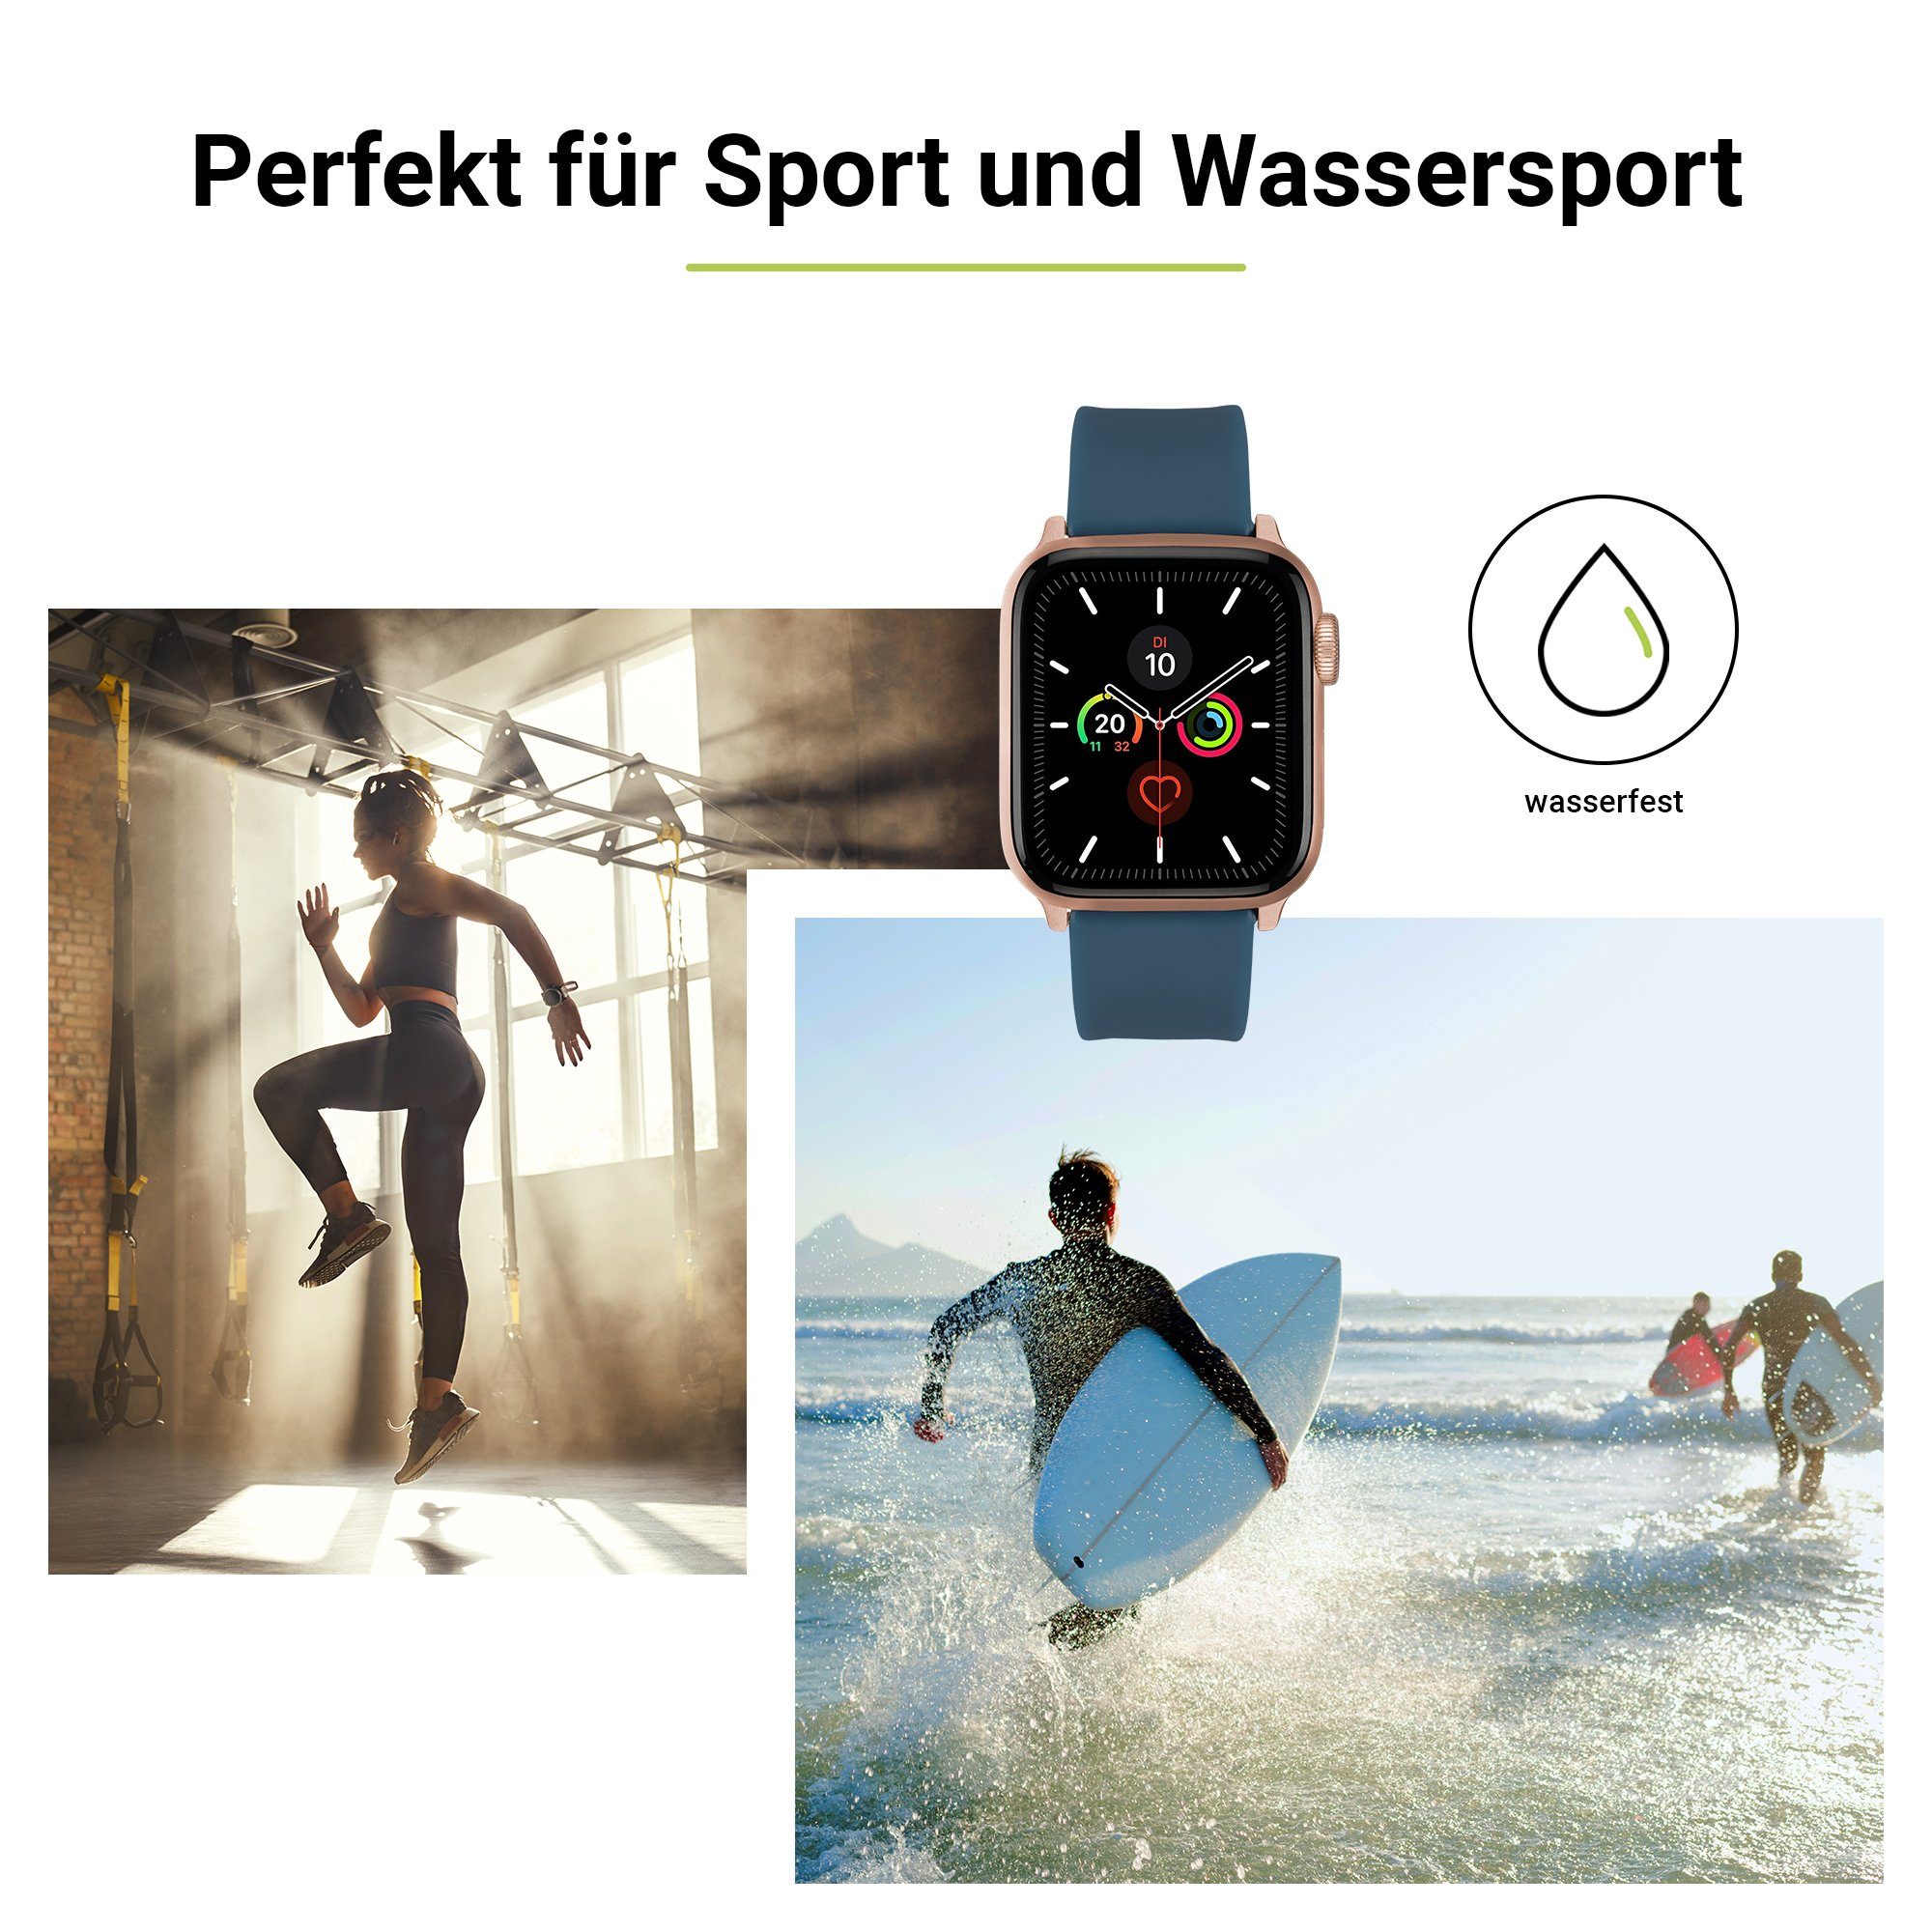 (42mm) (45mm), mit & Blau, (44mm), (49mm), 3-1 Smartwatch-Armband / 9-7 6-4 2 Silikon SE WatchBand Silicone, Watch Armband Adapter, Apple Artwizz Ultra